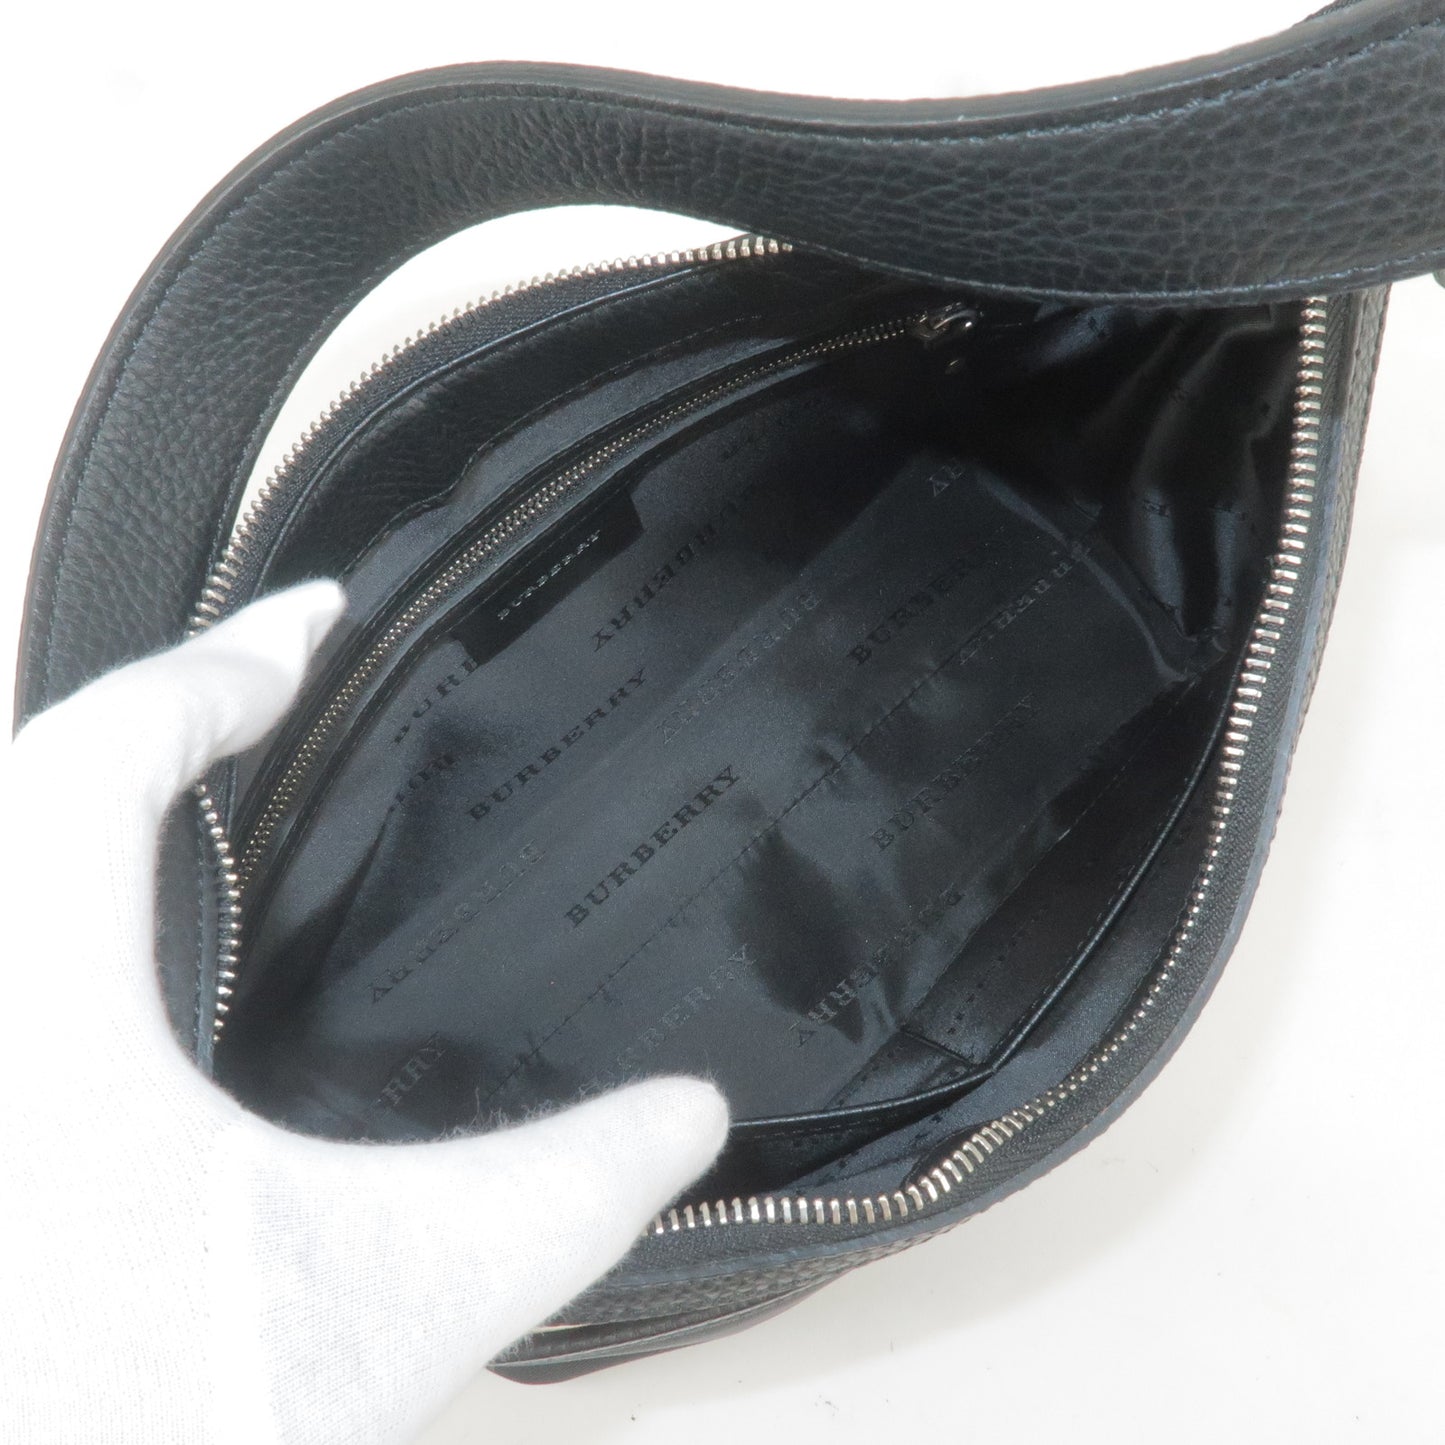 BURBERRY Nova Plaid Canvas Leather Shoulder Bag Beige Black